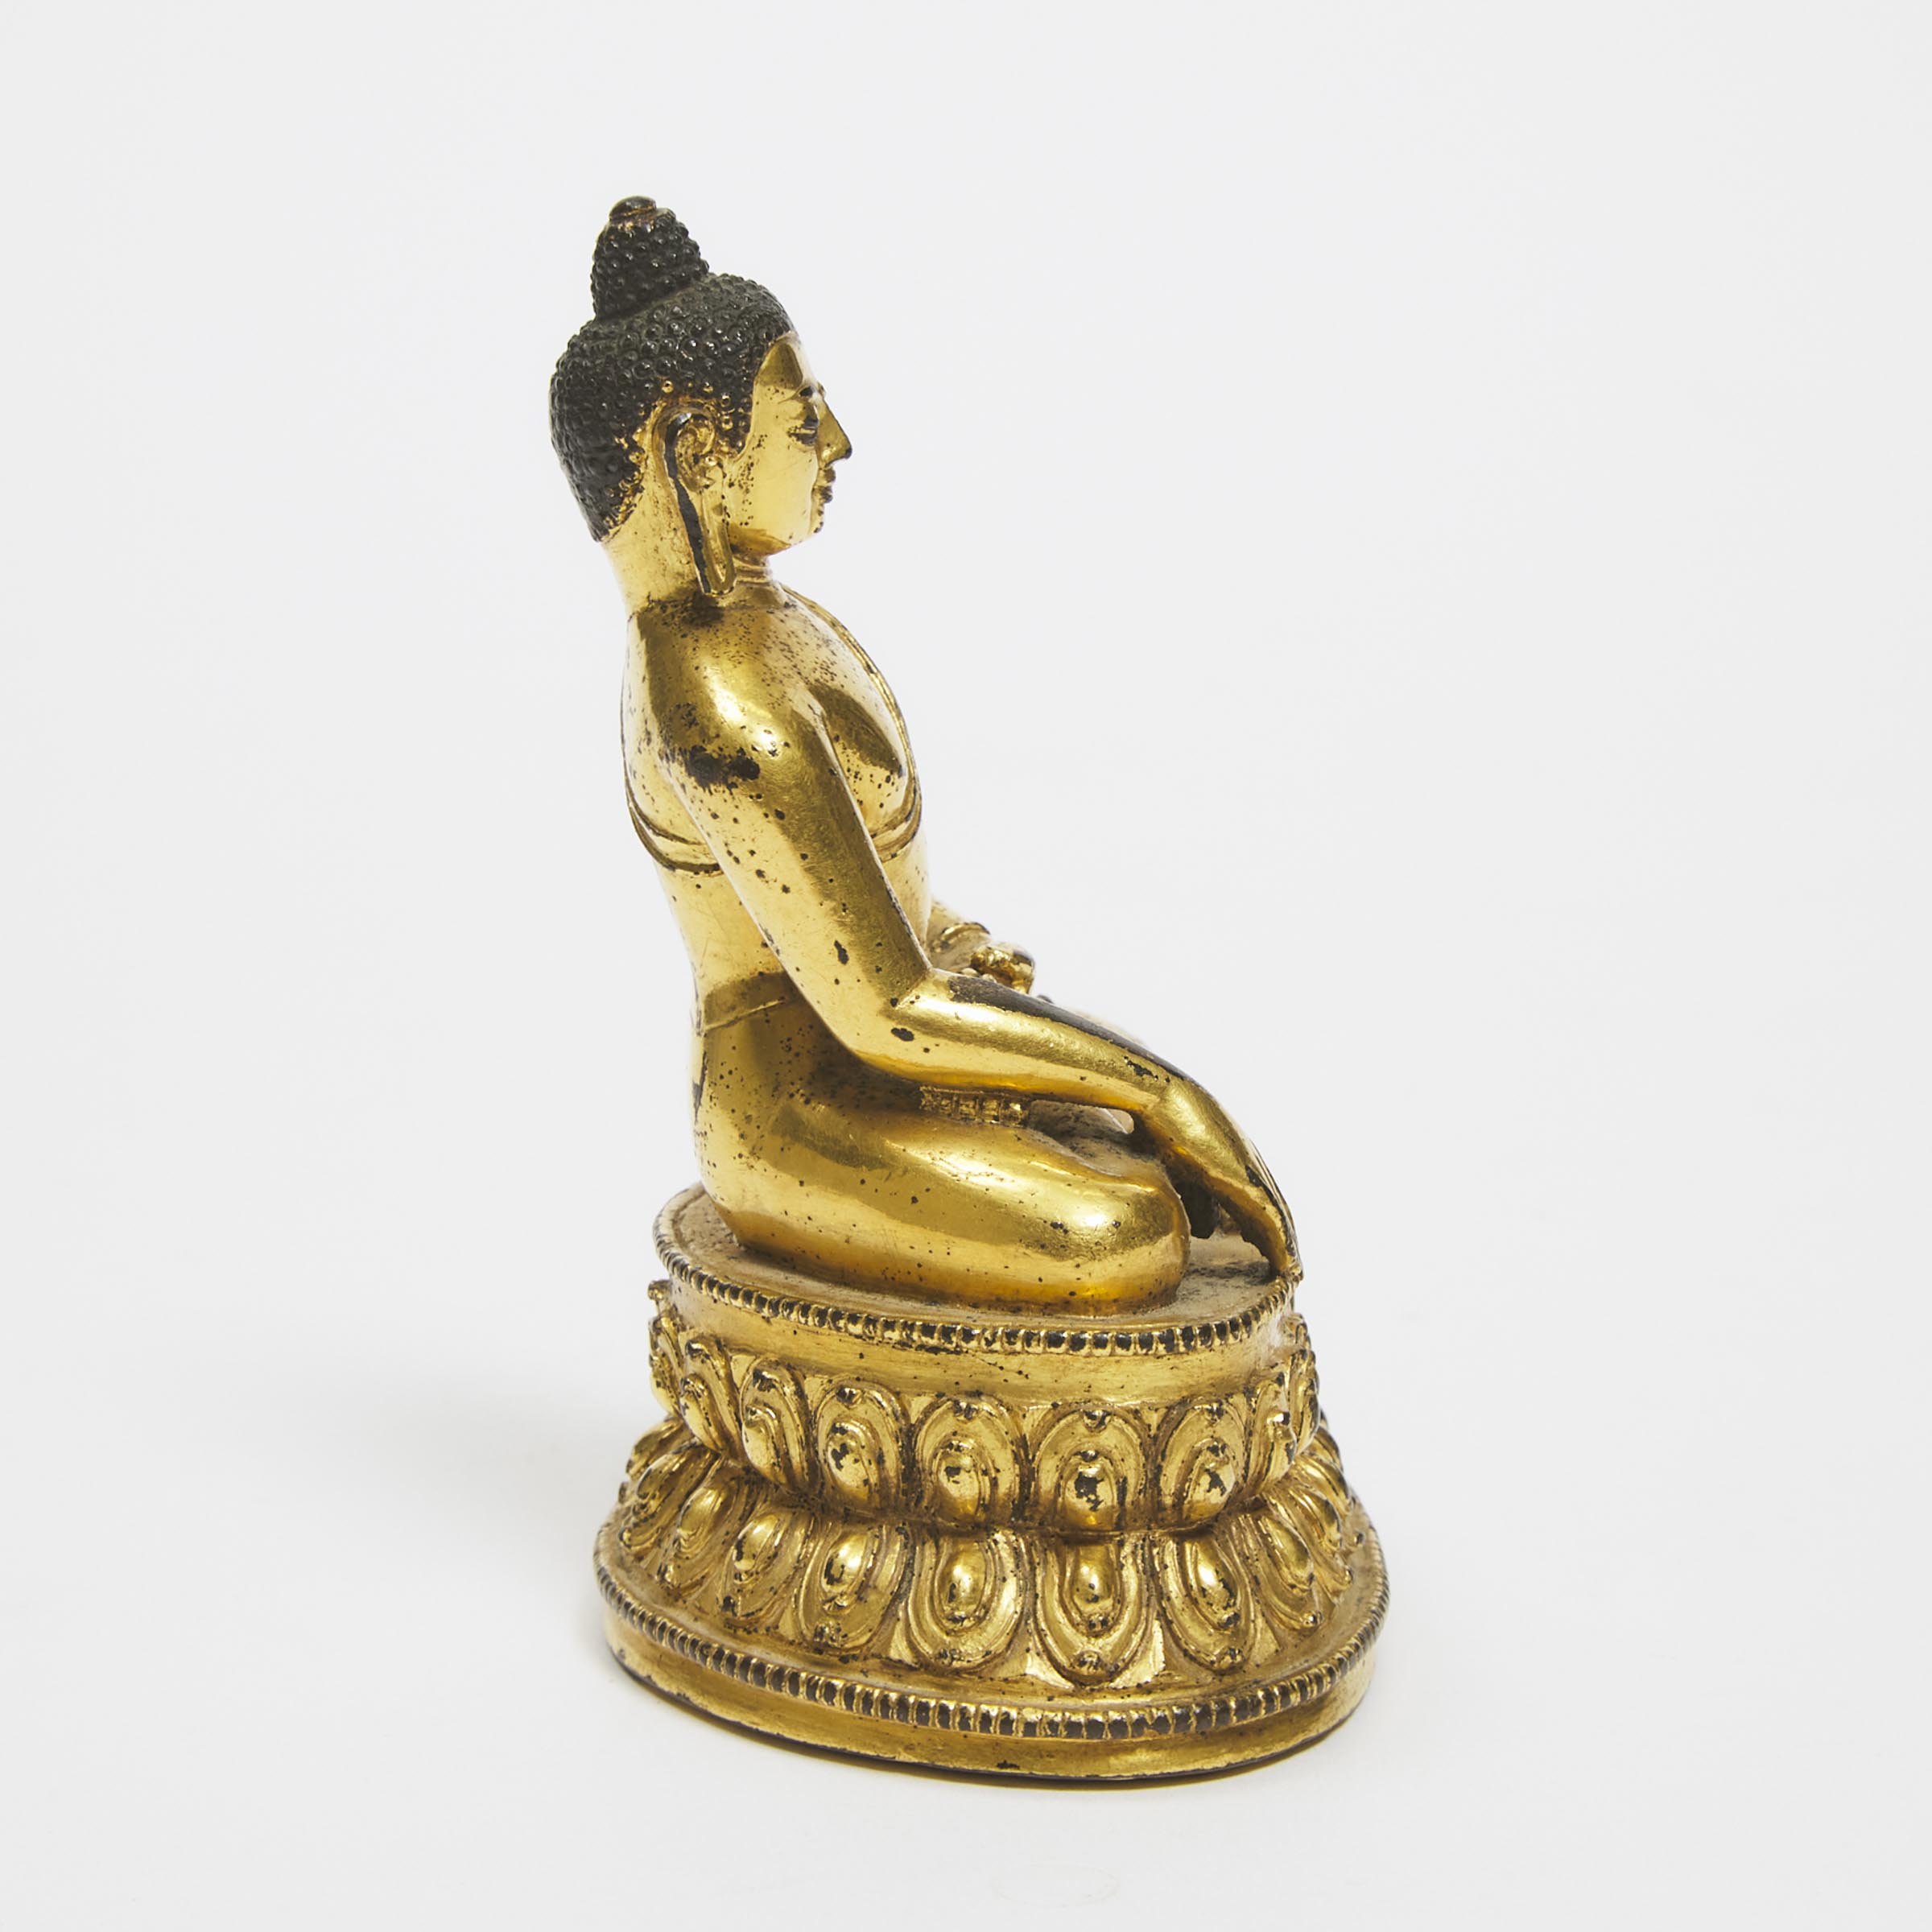 A Gilt Copper Alloy Figure of Seated Shakyamuni Buddha, Tibet, 15th Century